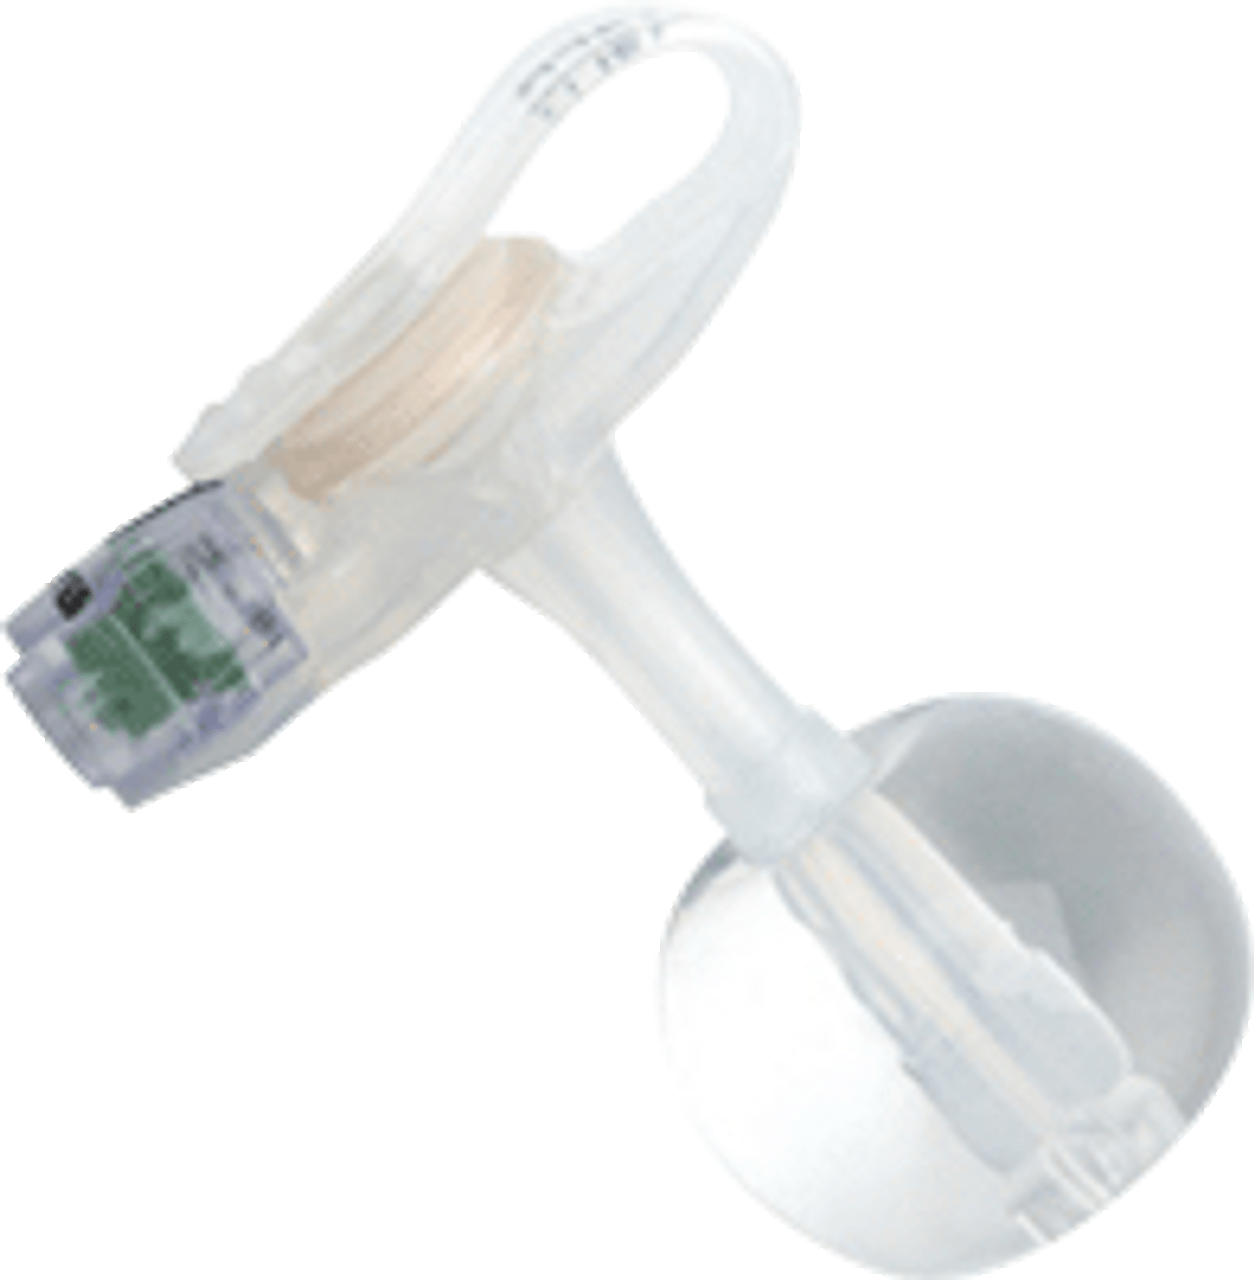 Balloon Button Gastrostomy Feeding Device Mini One 14 Fr. 6.0 cm Silicone Sterile